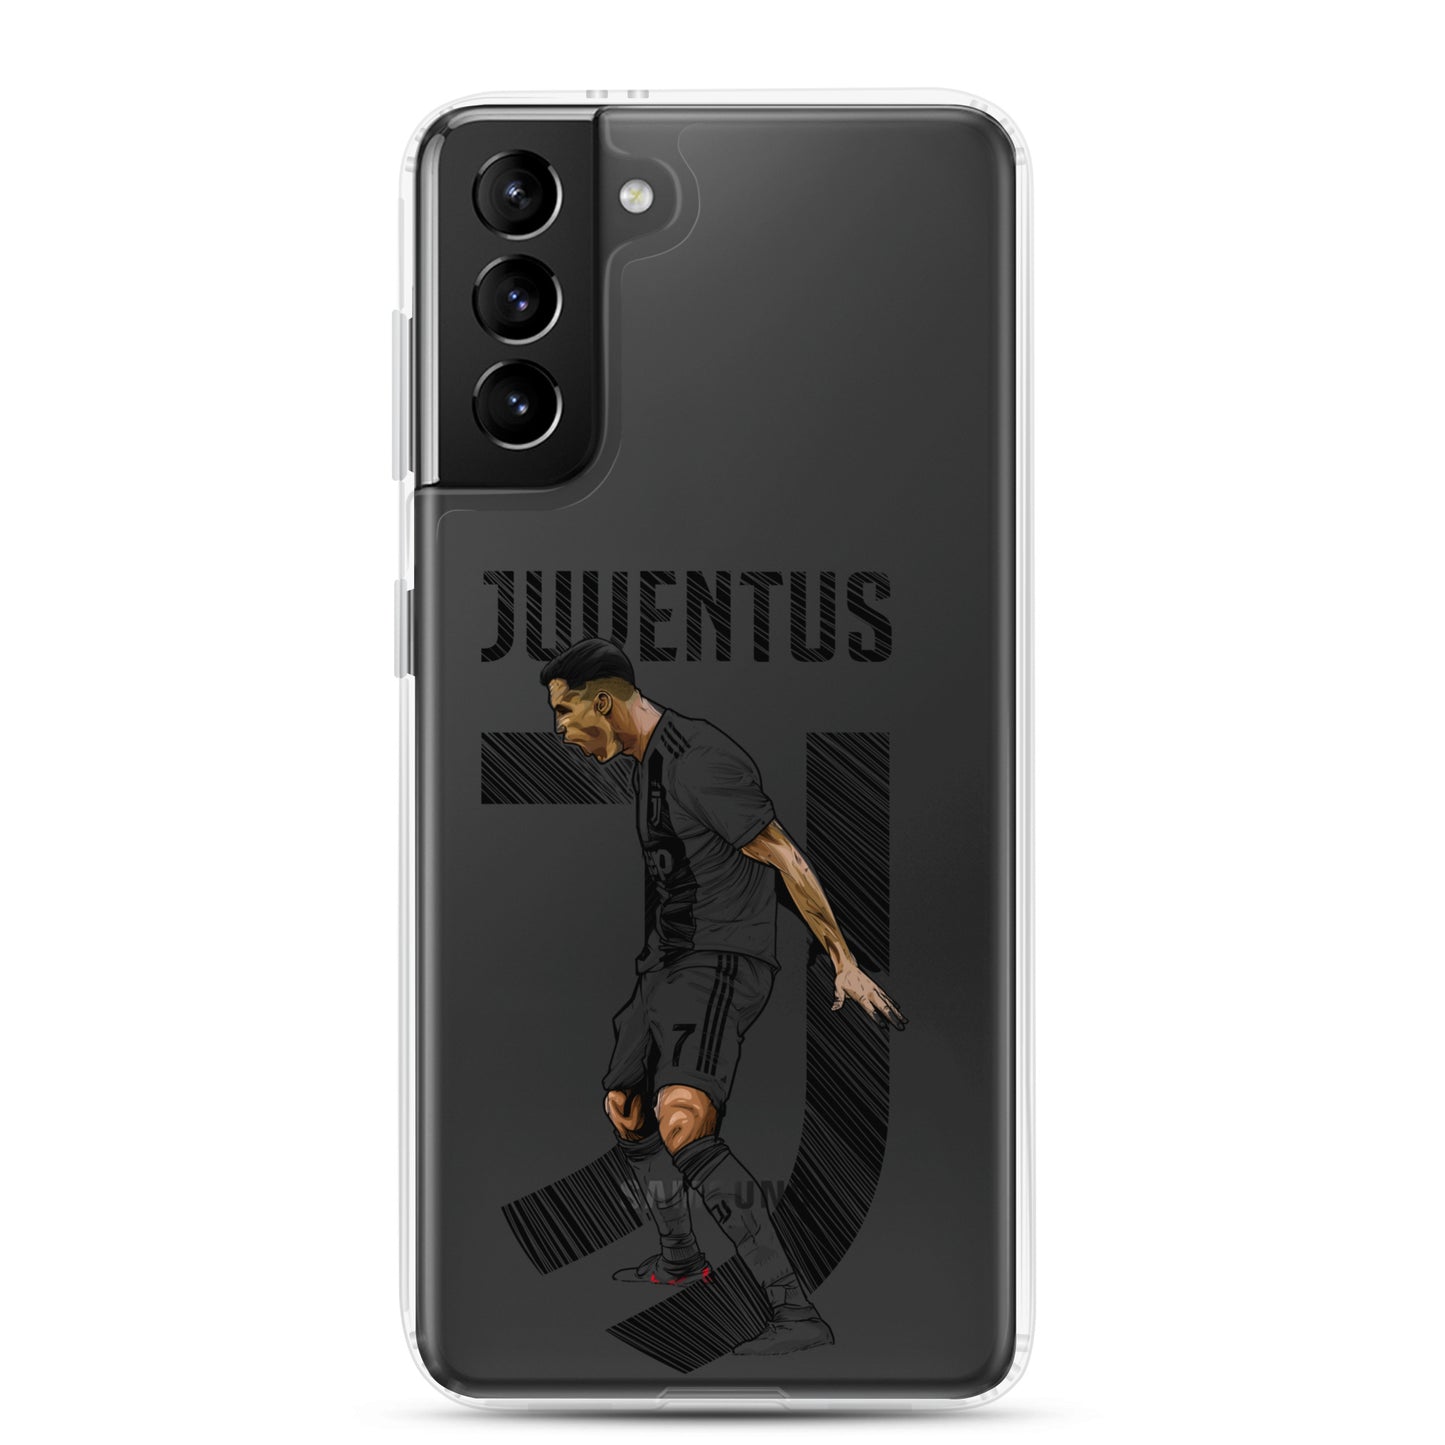 CR7 Juventus Siuu Samsung Case - The 90+ Minute